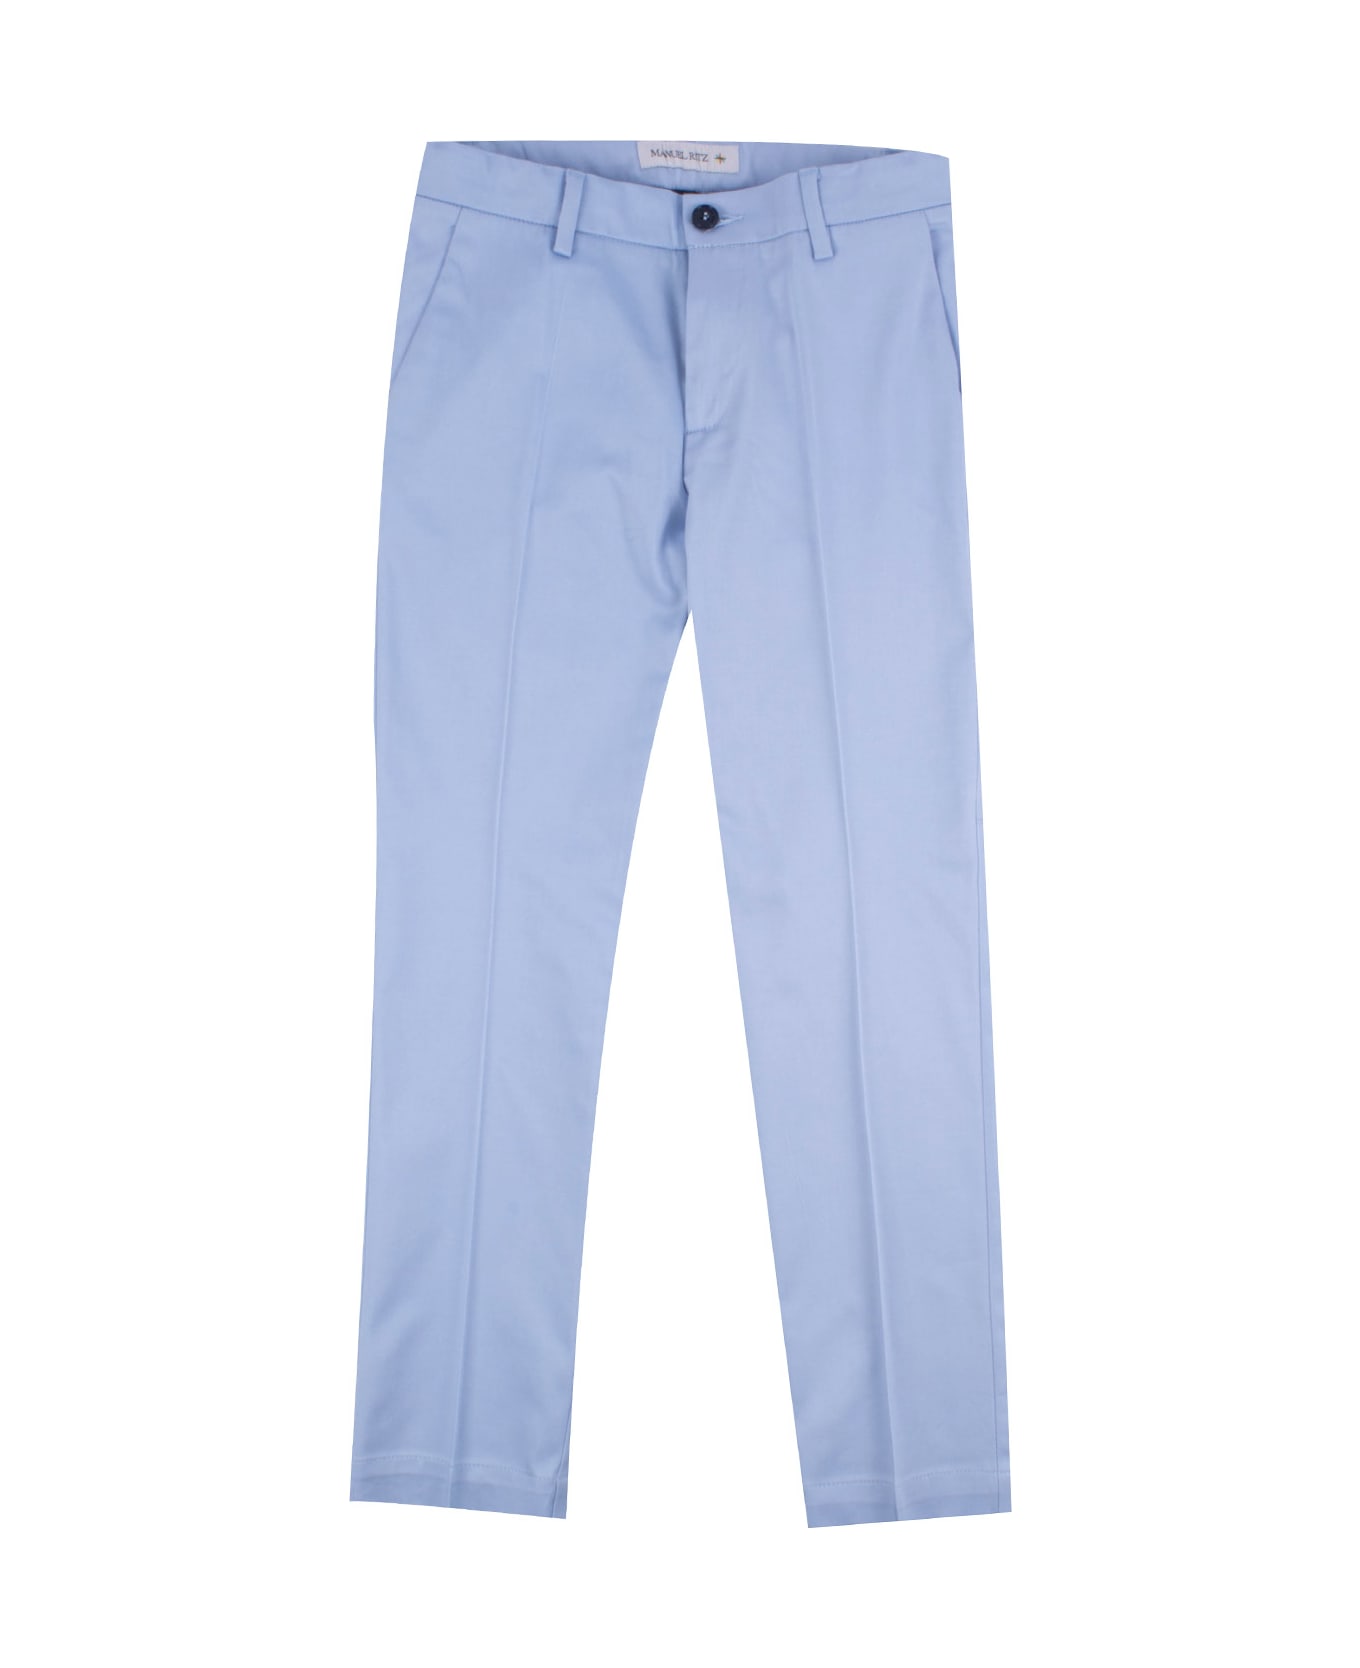 Manuel Ritz Cotton Pants - Light blue ボトムス